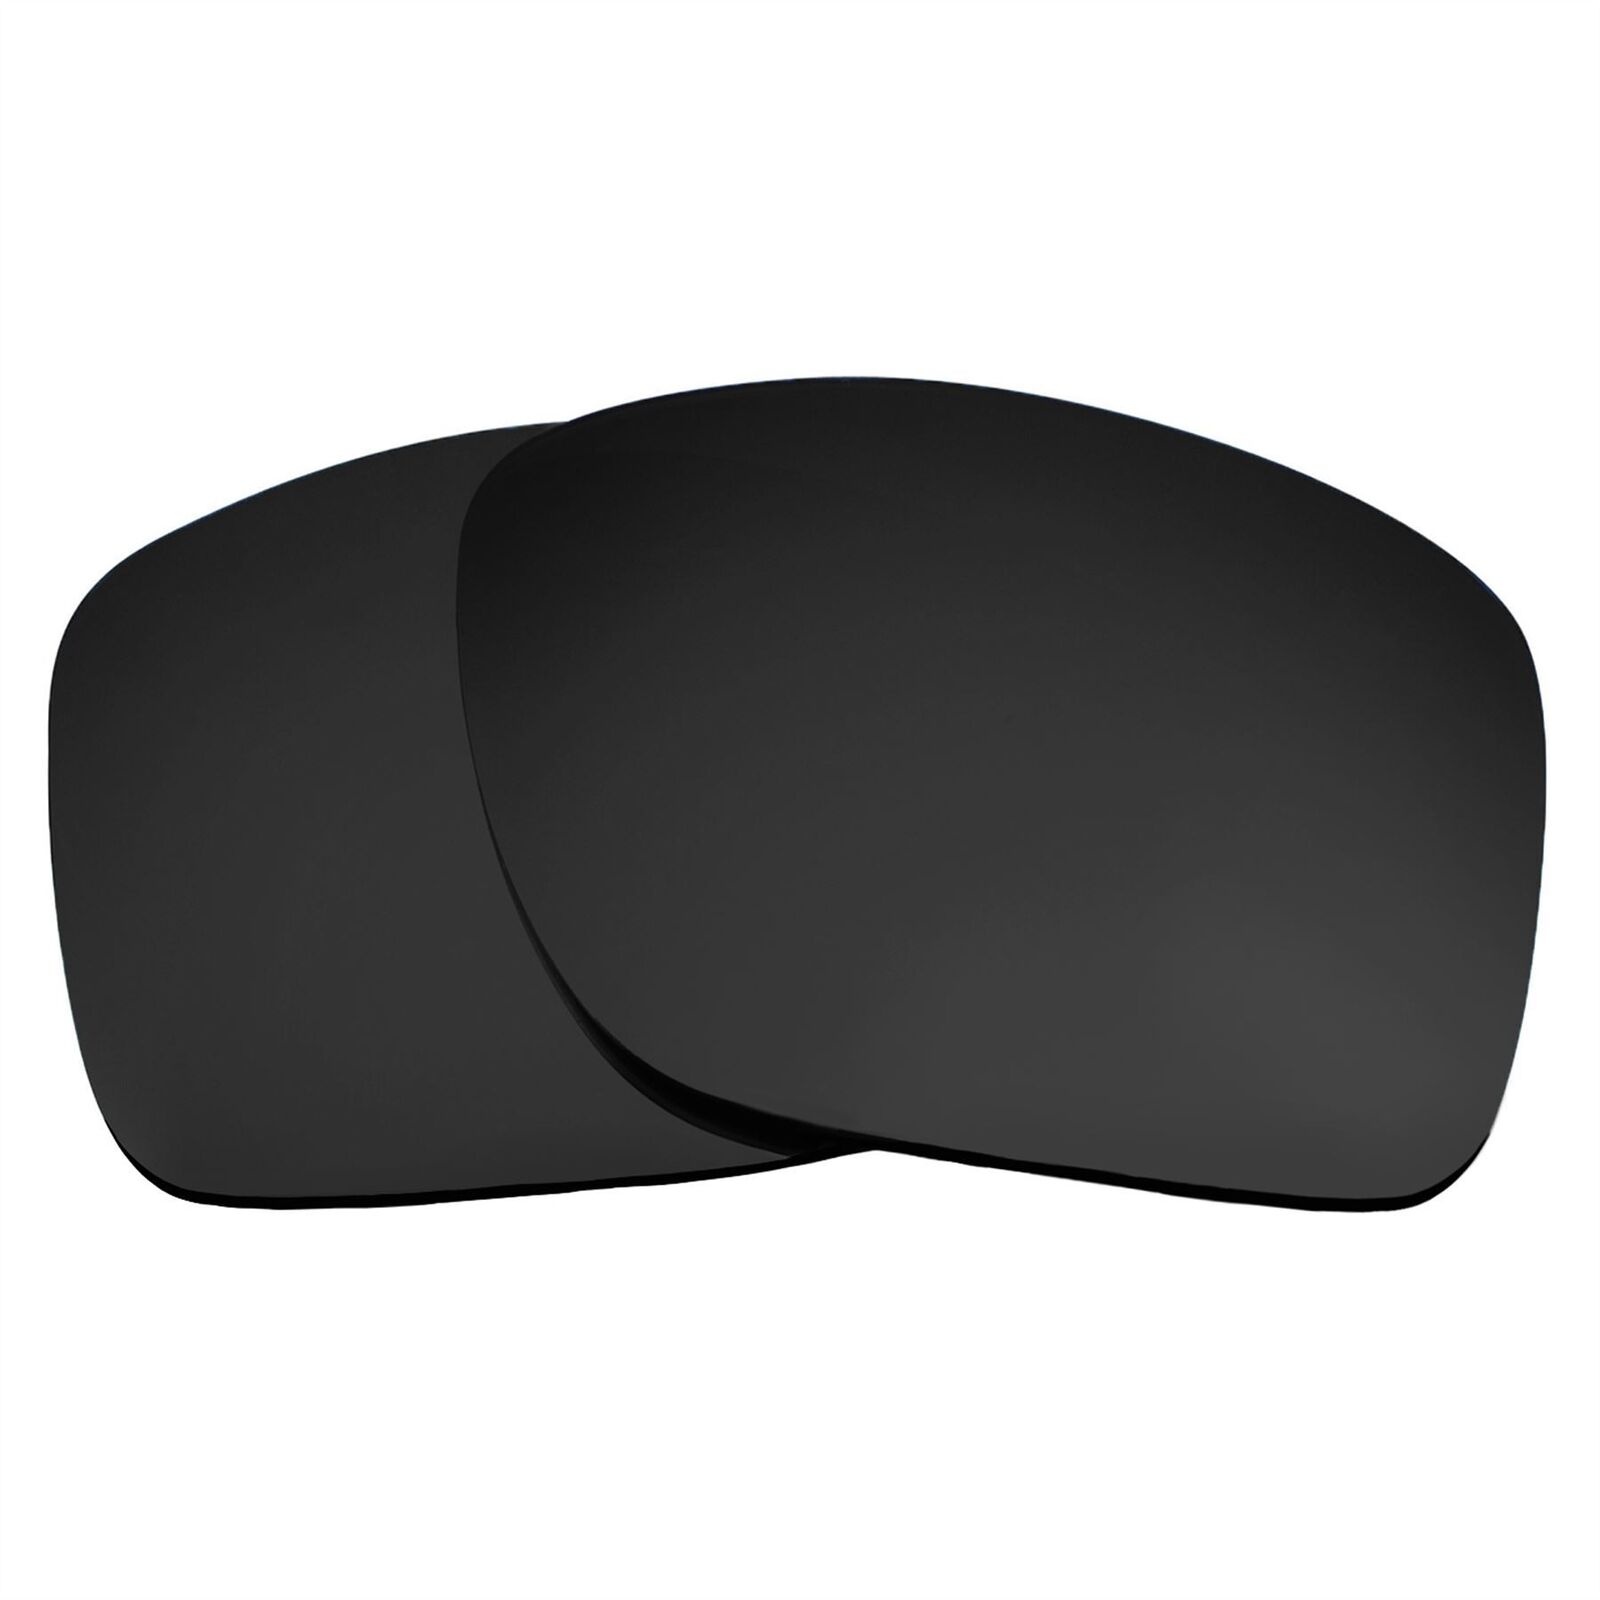 Polarized Black Rudy Project Noyz Replacement Lenses by Seek Optics - FINAL SALE